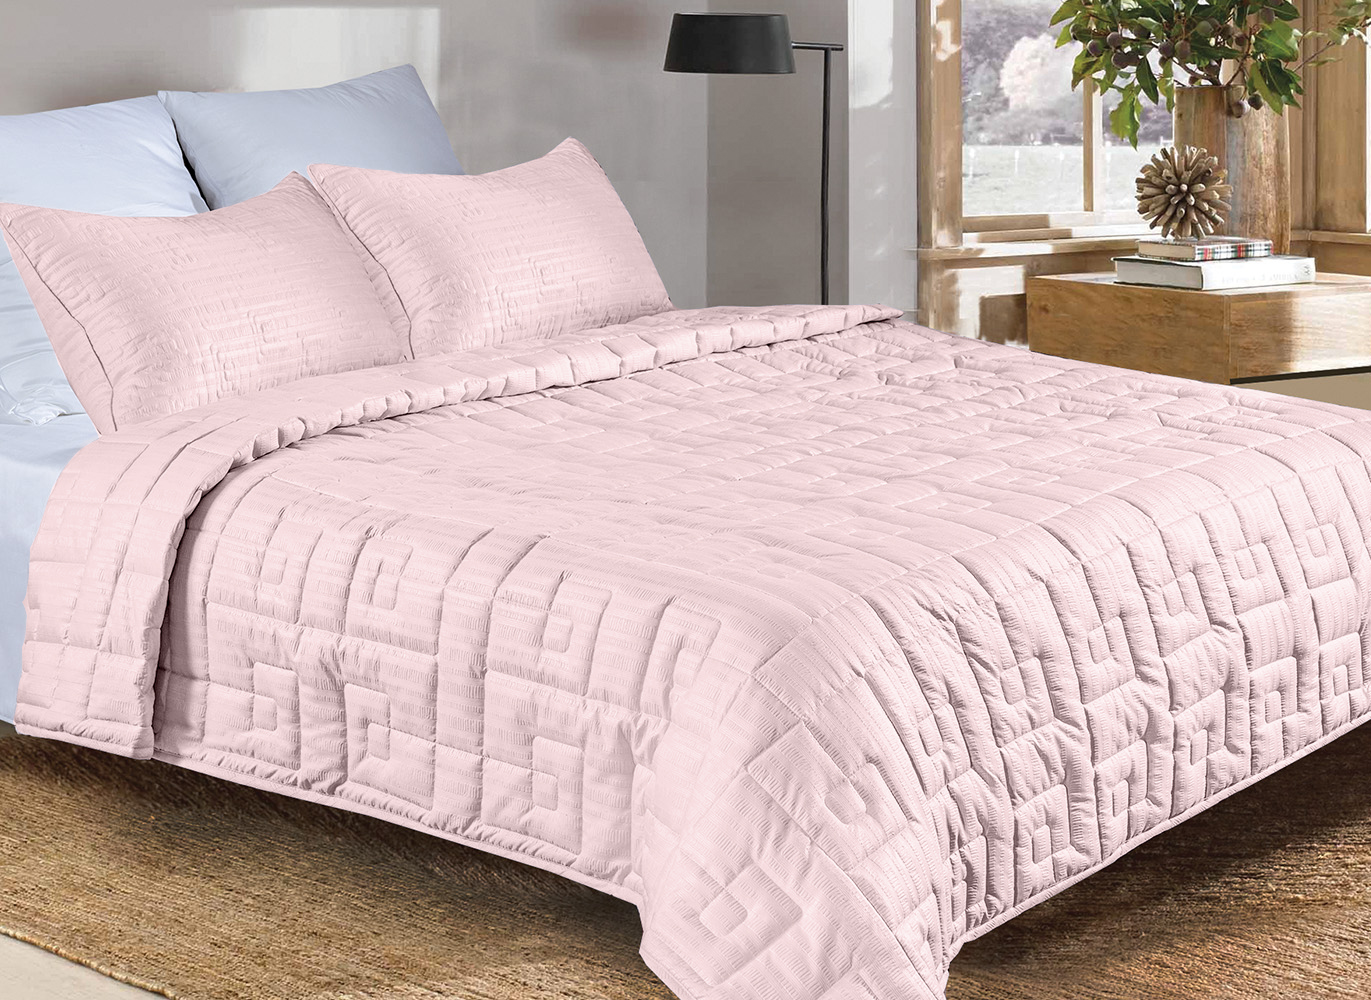 Одеяло Rosaline 140х205, цвет розовый, ТМ Just Sleep